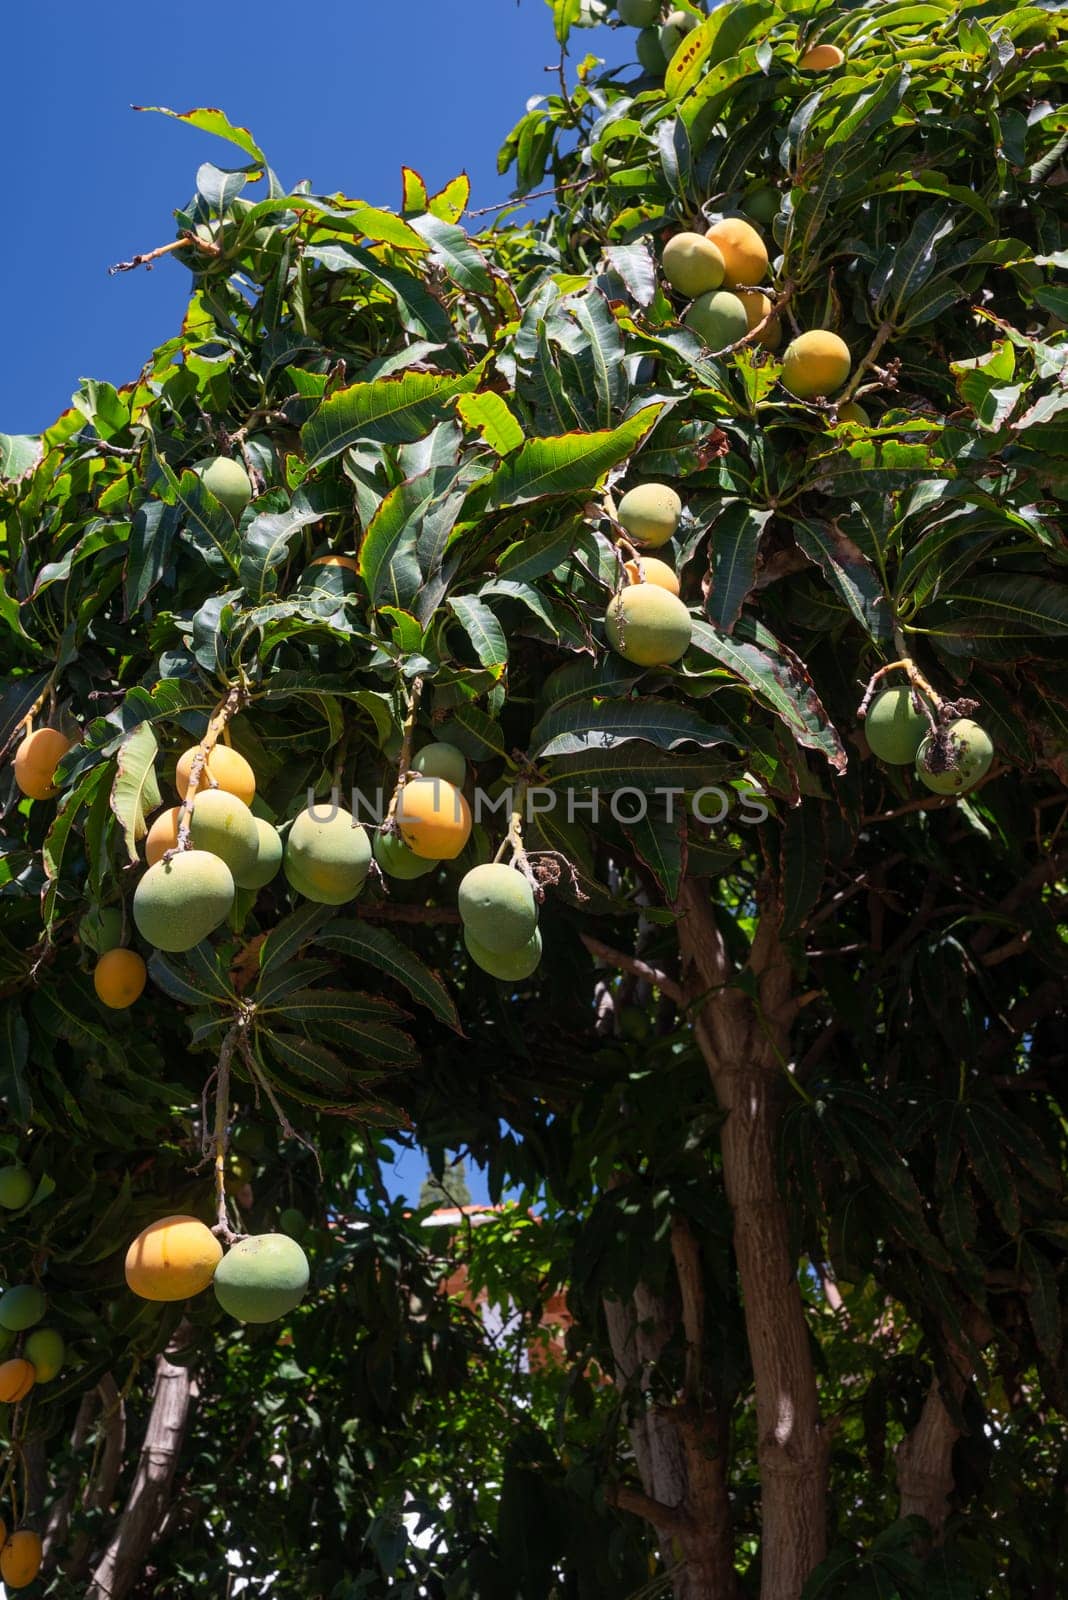 Ripe yellow and green nispero fruit growing on a tree. Japanese loquat or medlar by amovitania